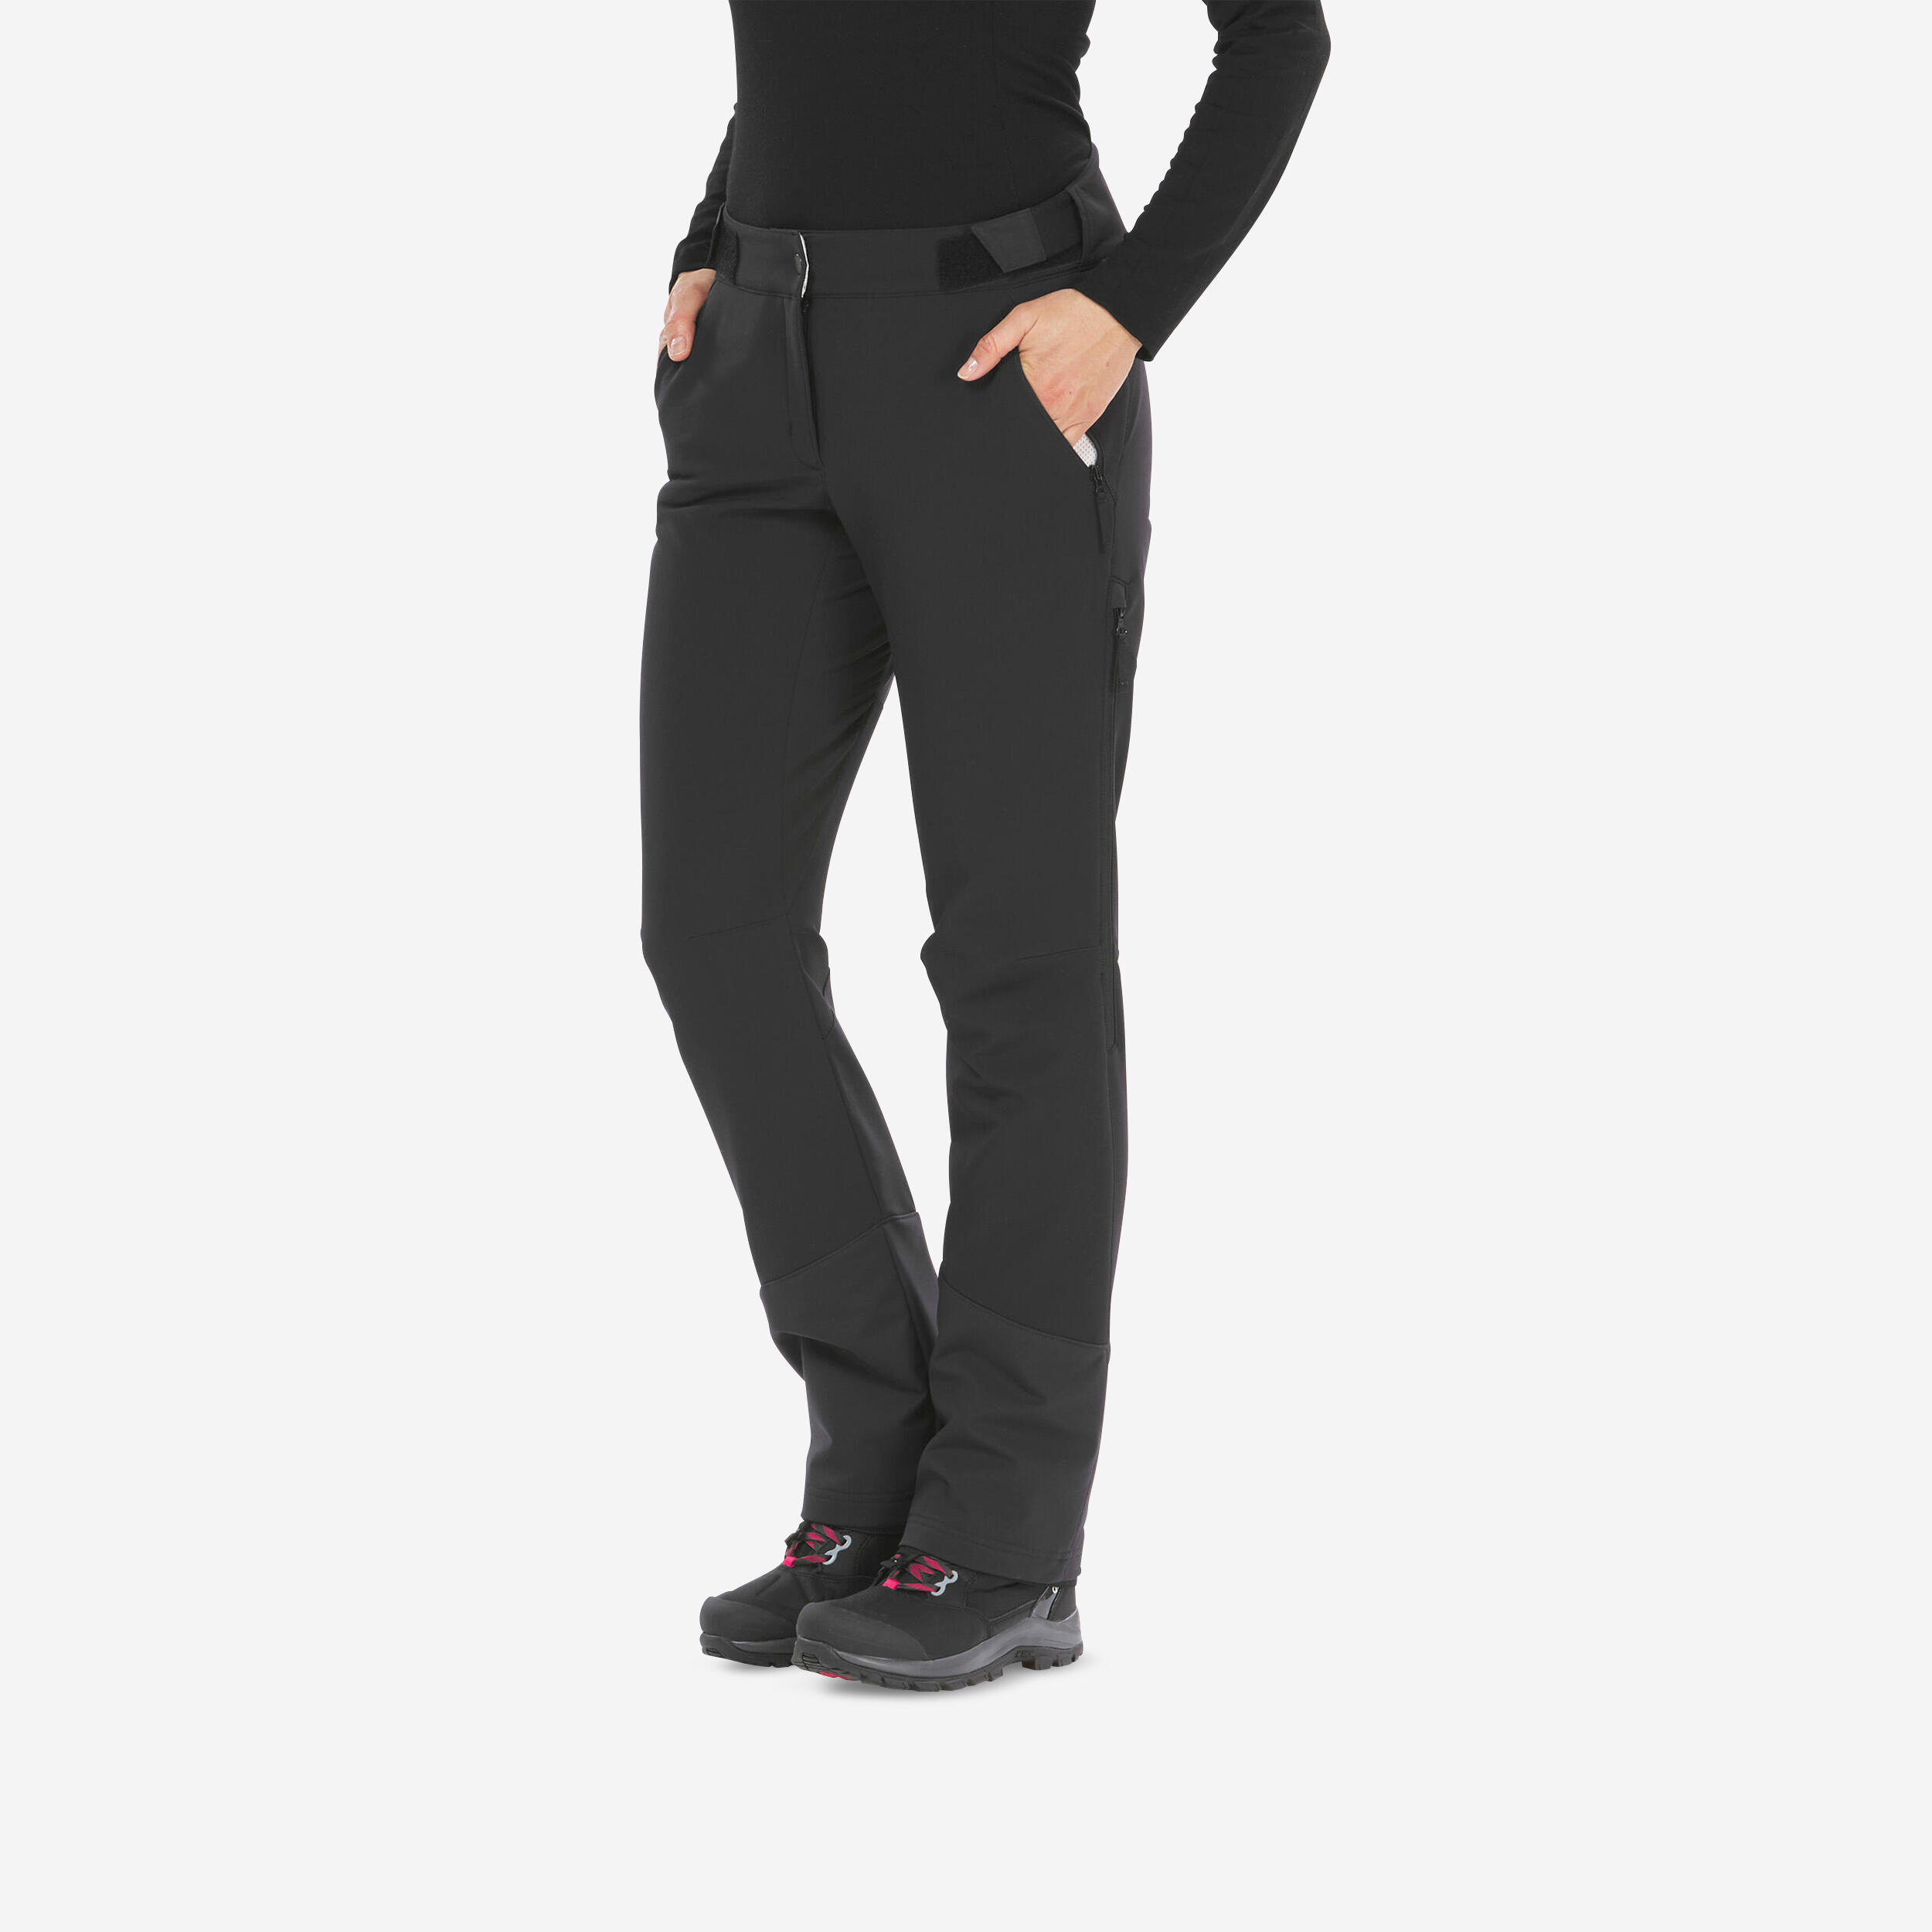 Women's Stretchy KAP Pants - Outdoor Pants